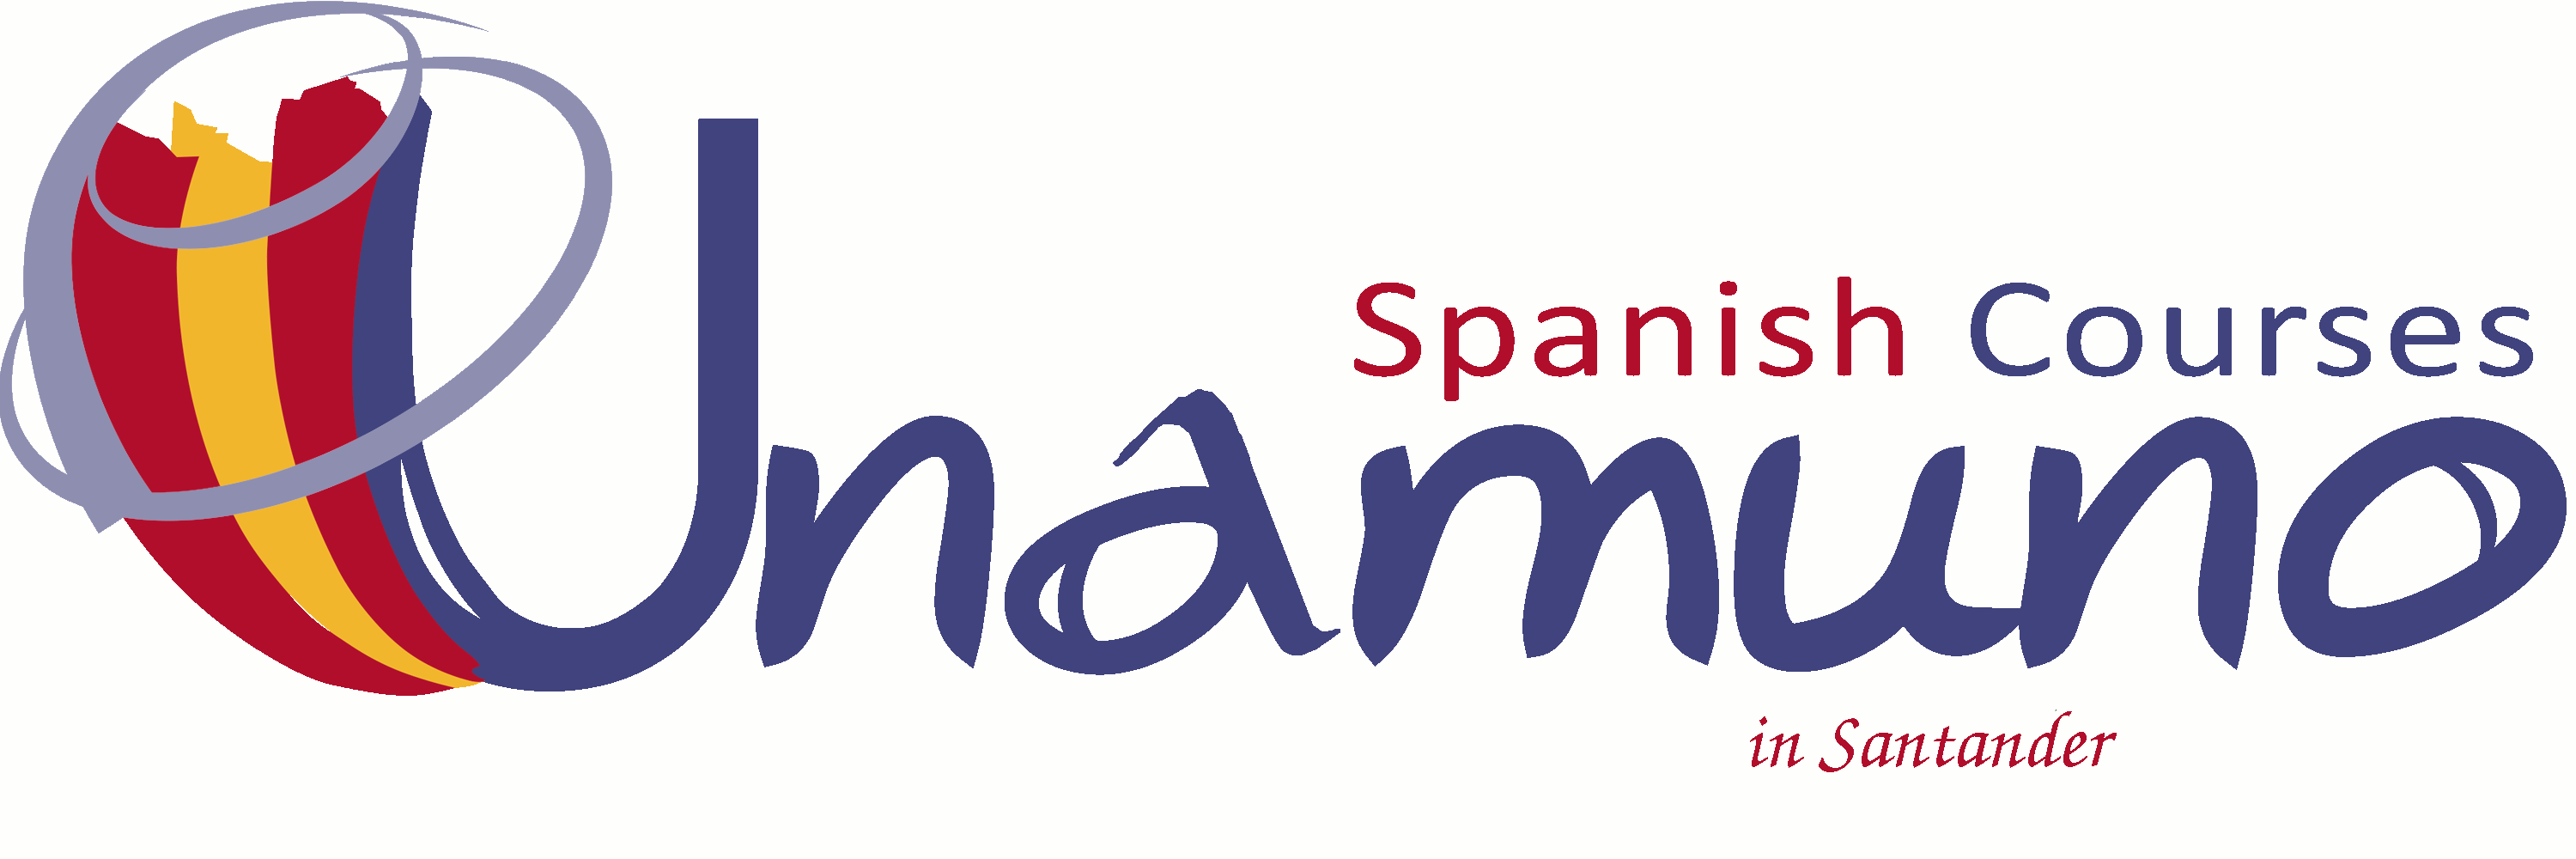 Spanish Courses Unamuno  in Santander